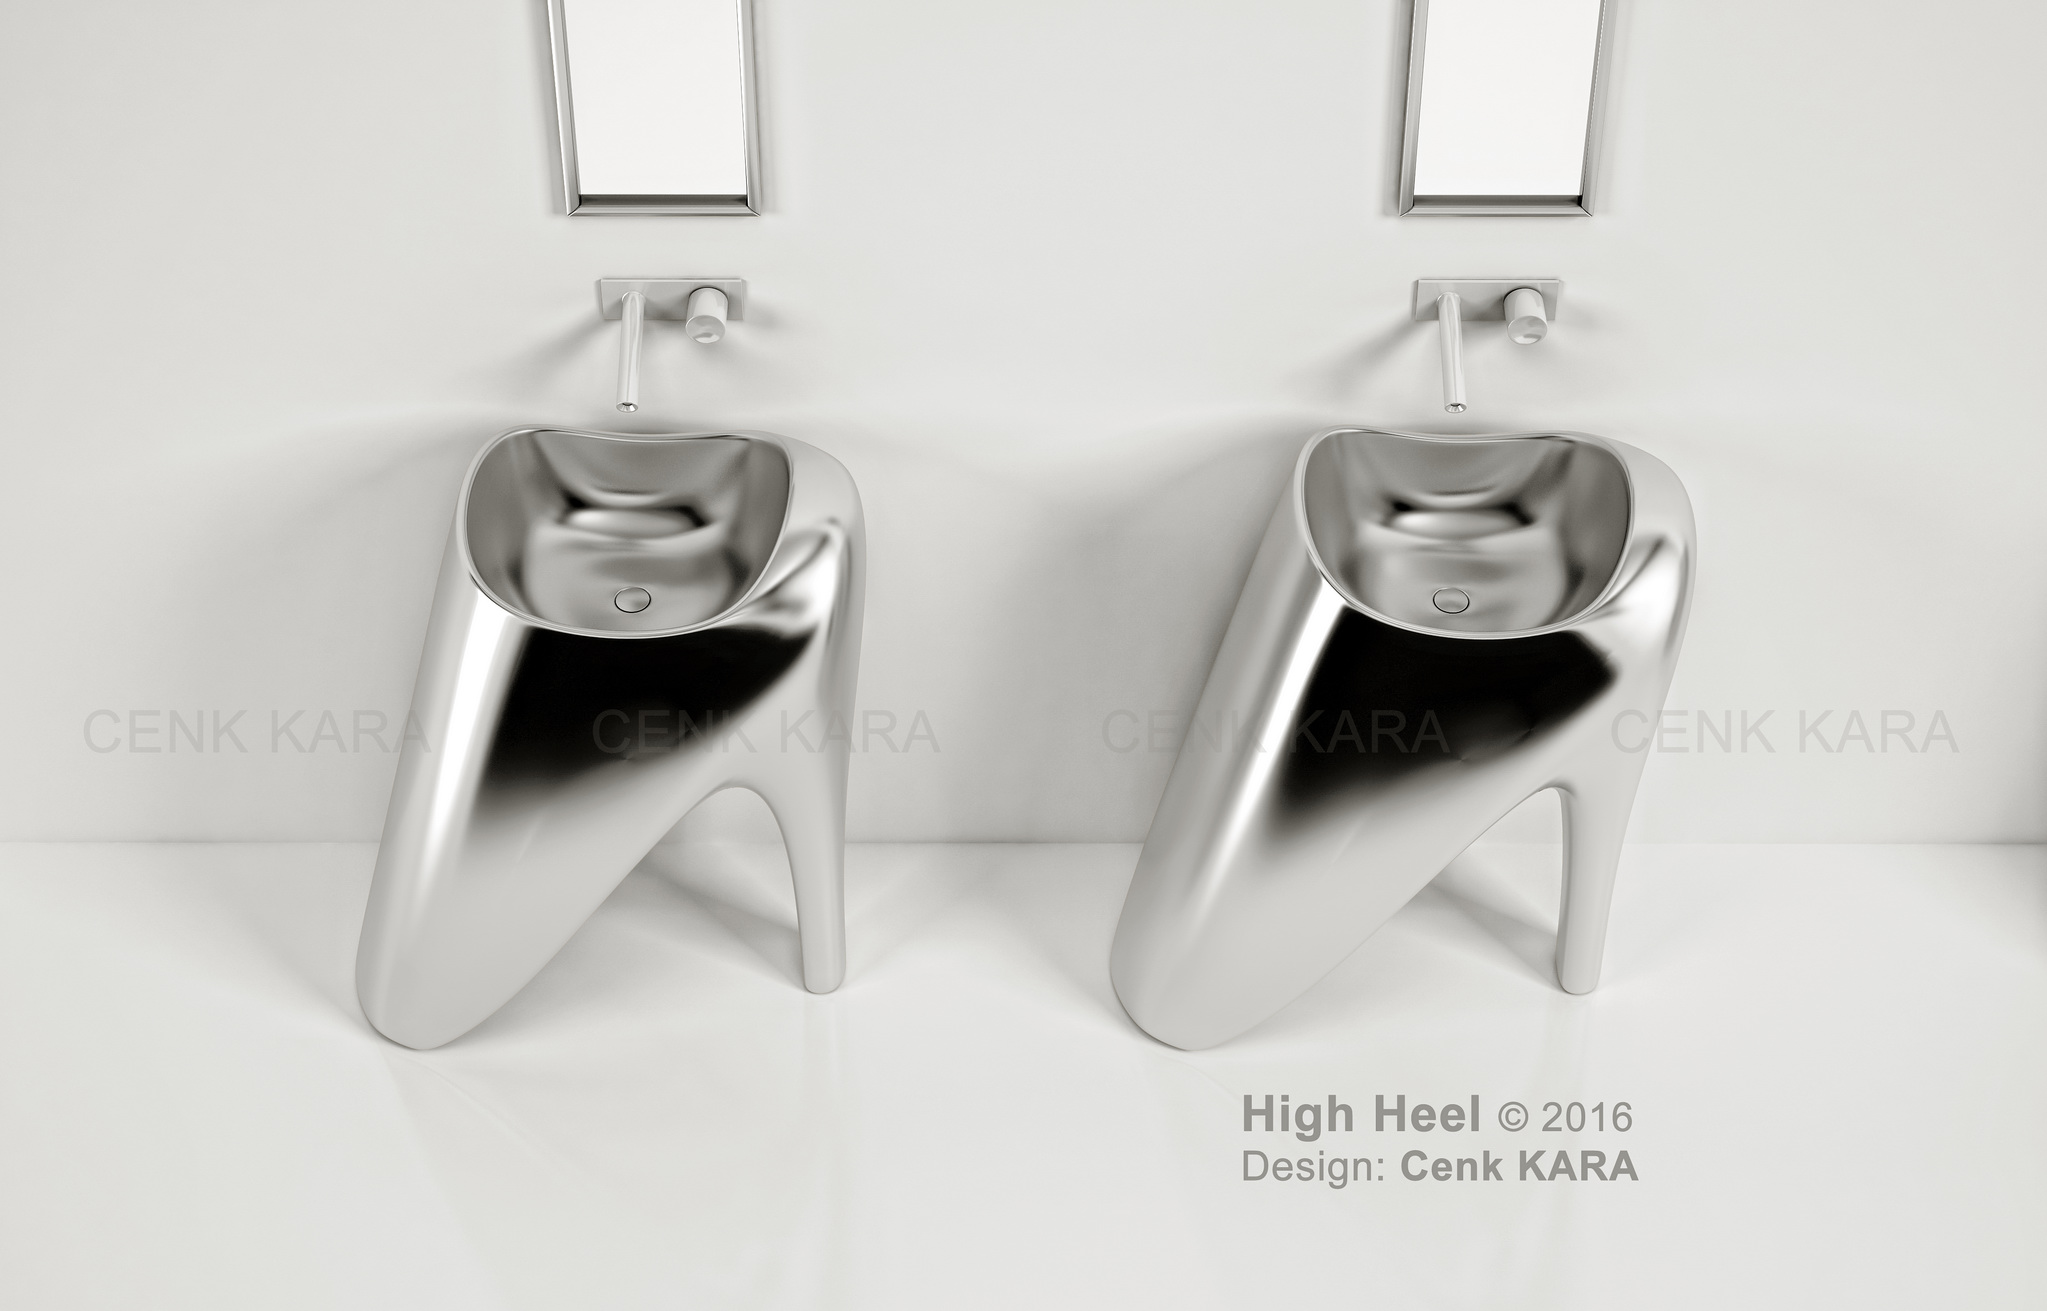 High Heel - freestanding washbasin